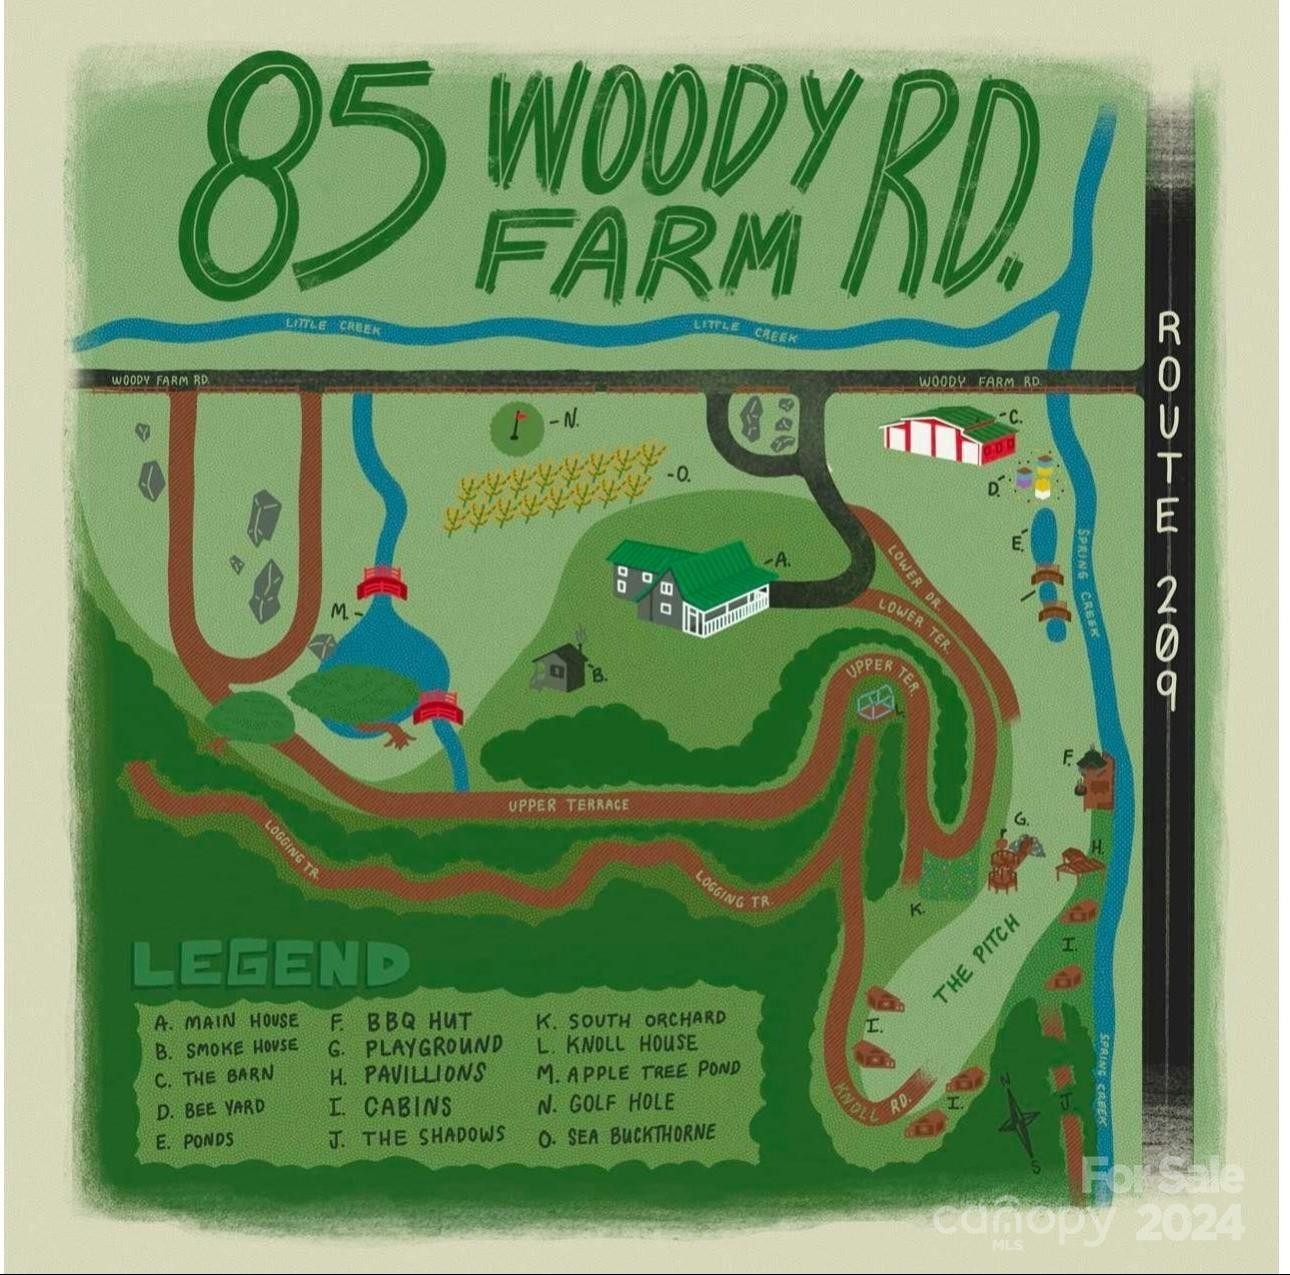 48. 85 Woody Farm Road